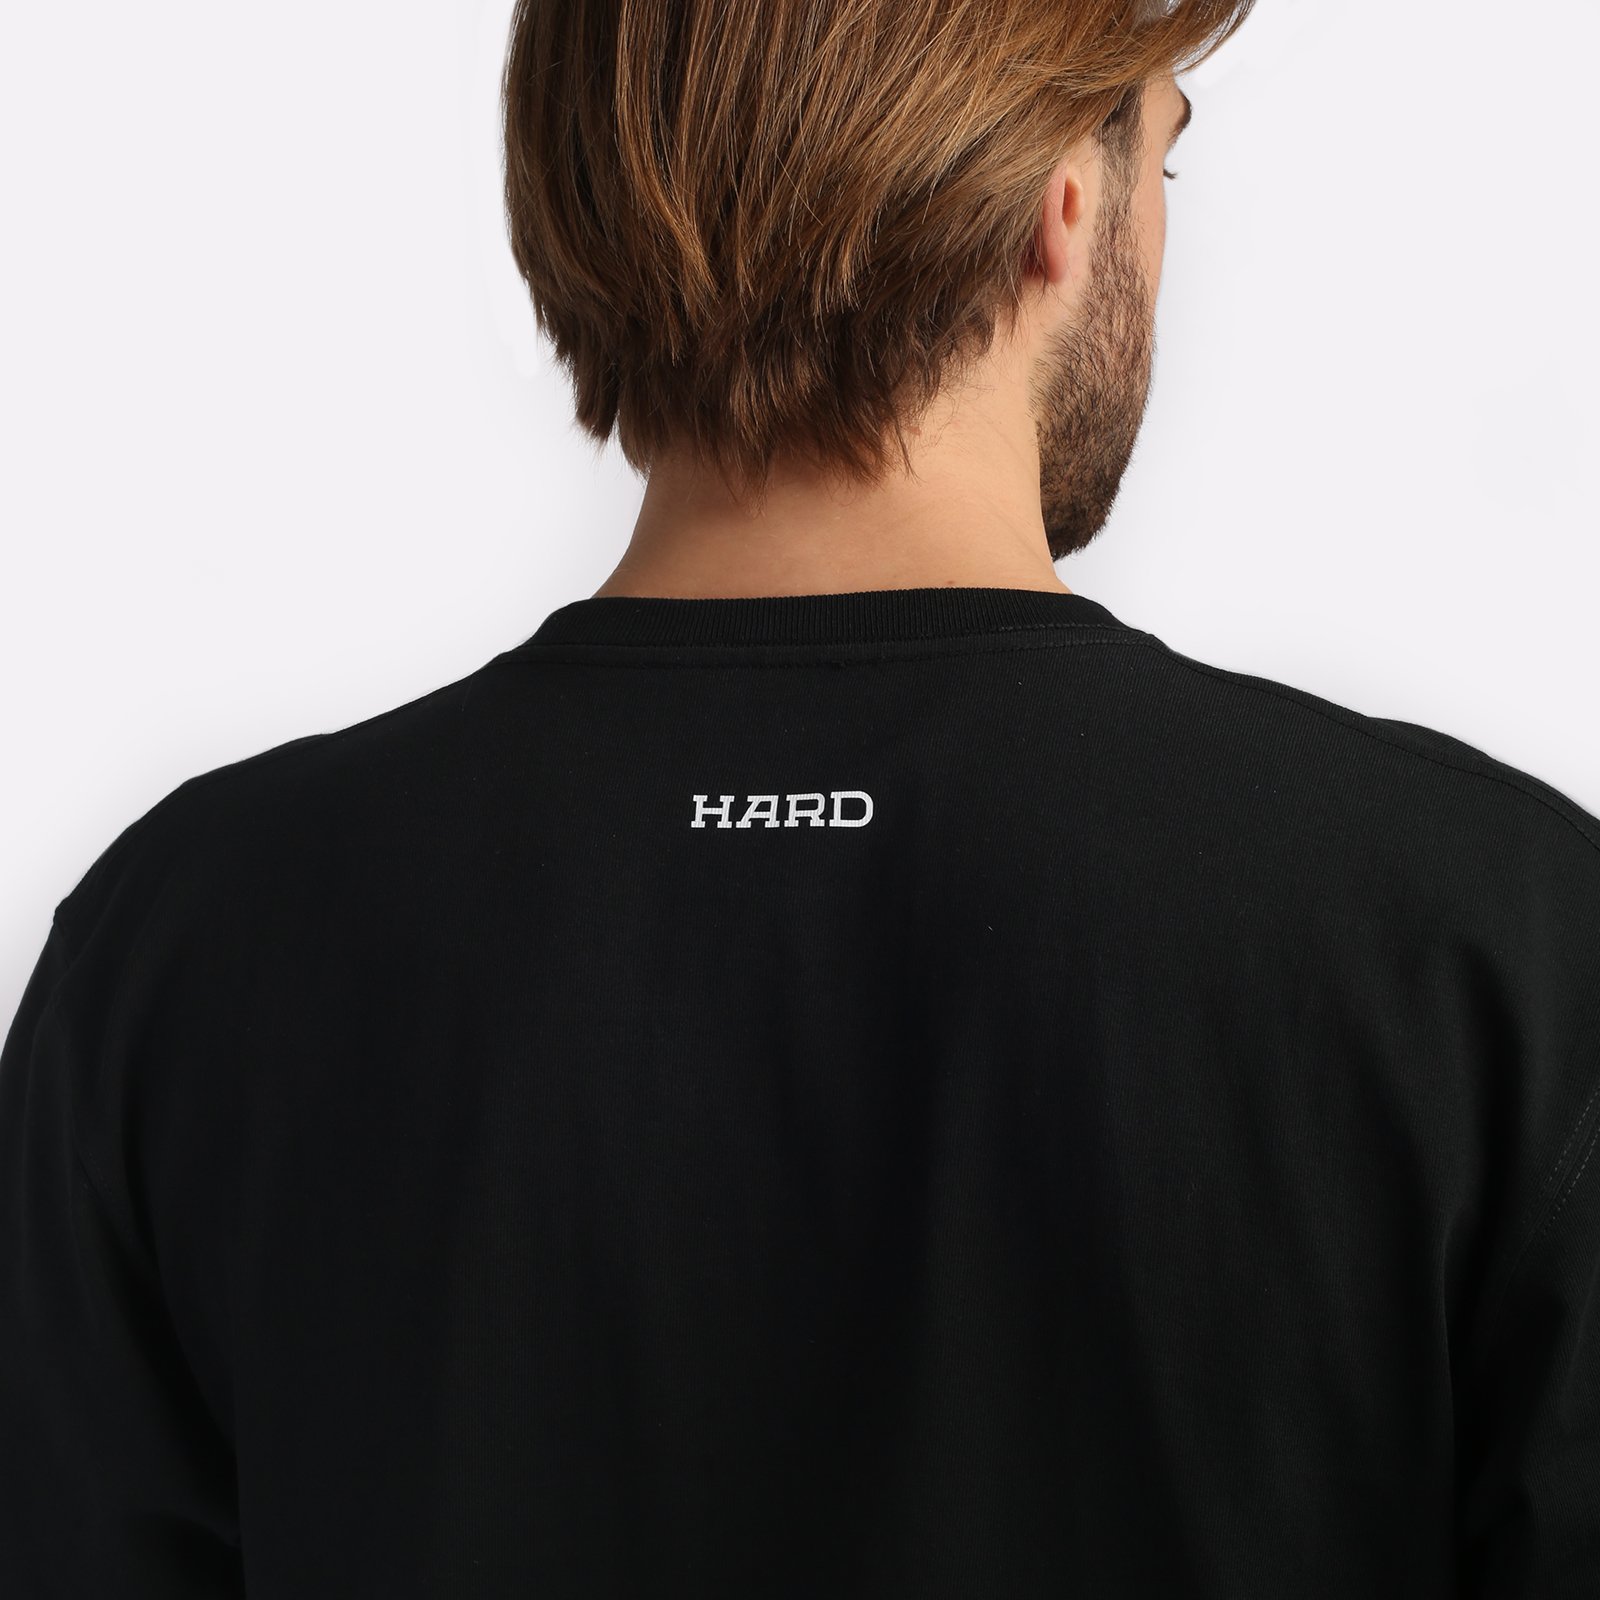 мужская футболка Hard Logo Tee  (Hrdtee-black)  - цена, описание, фото 5